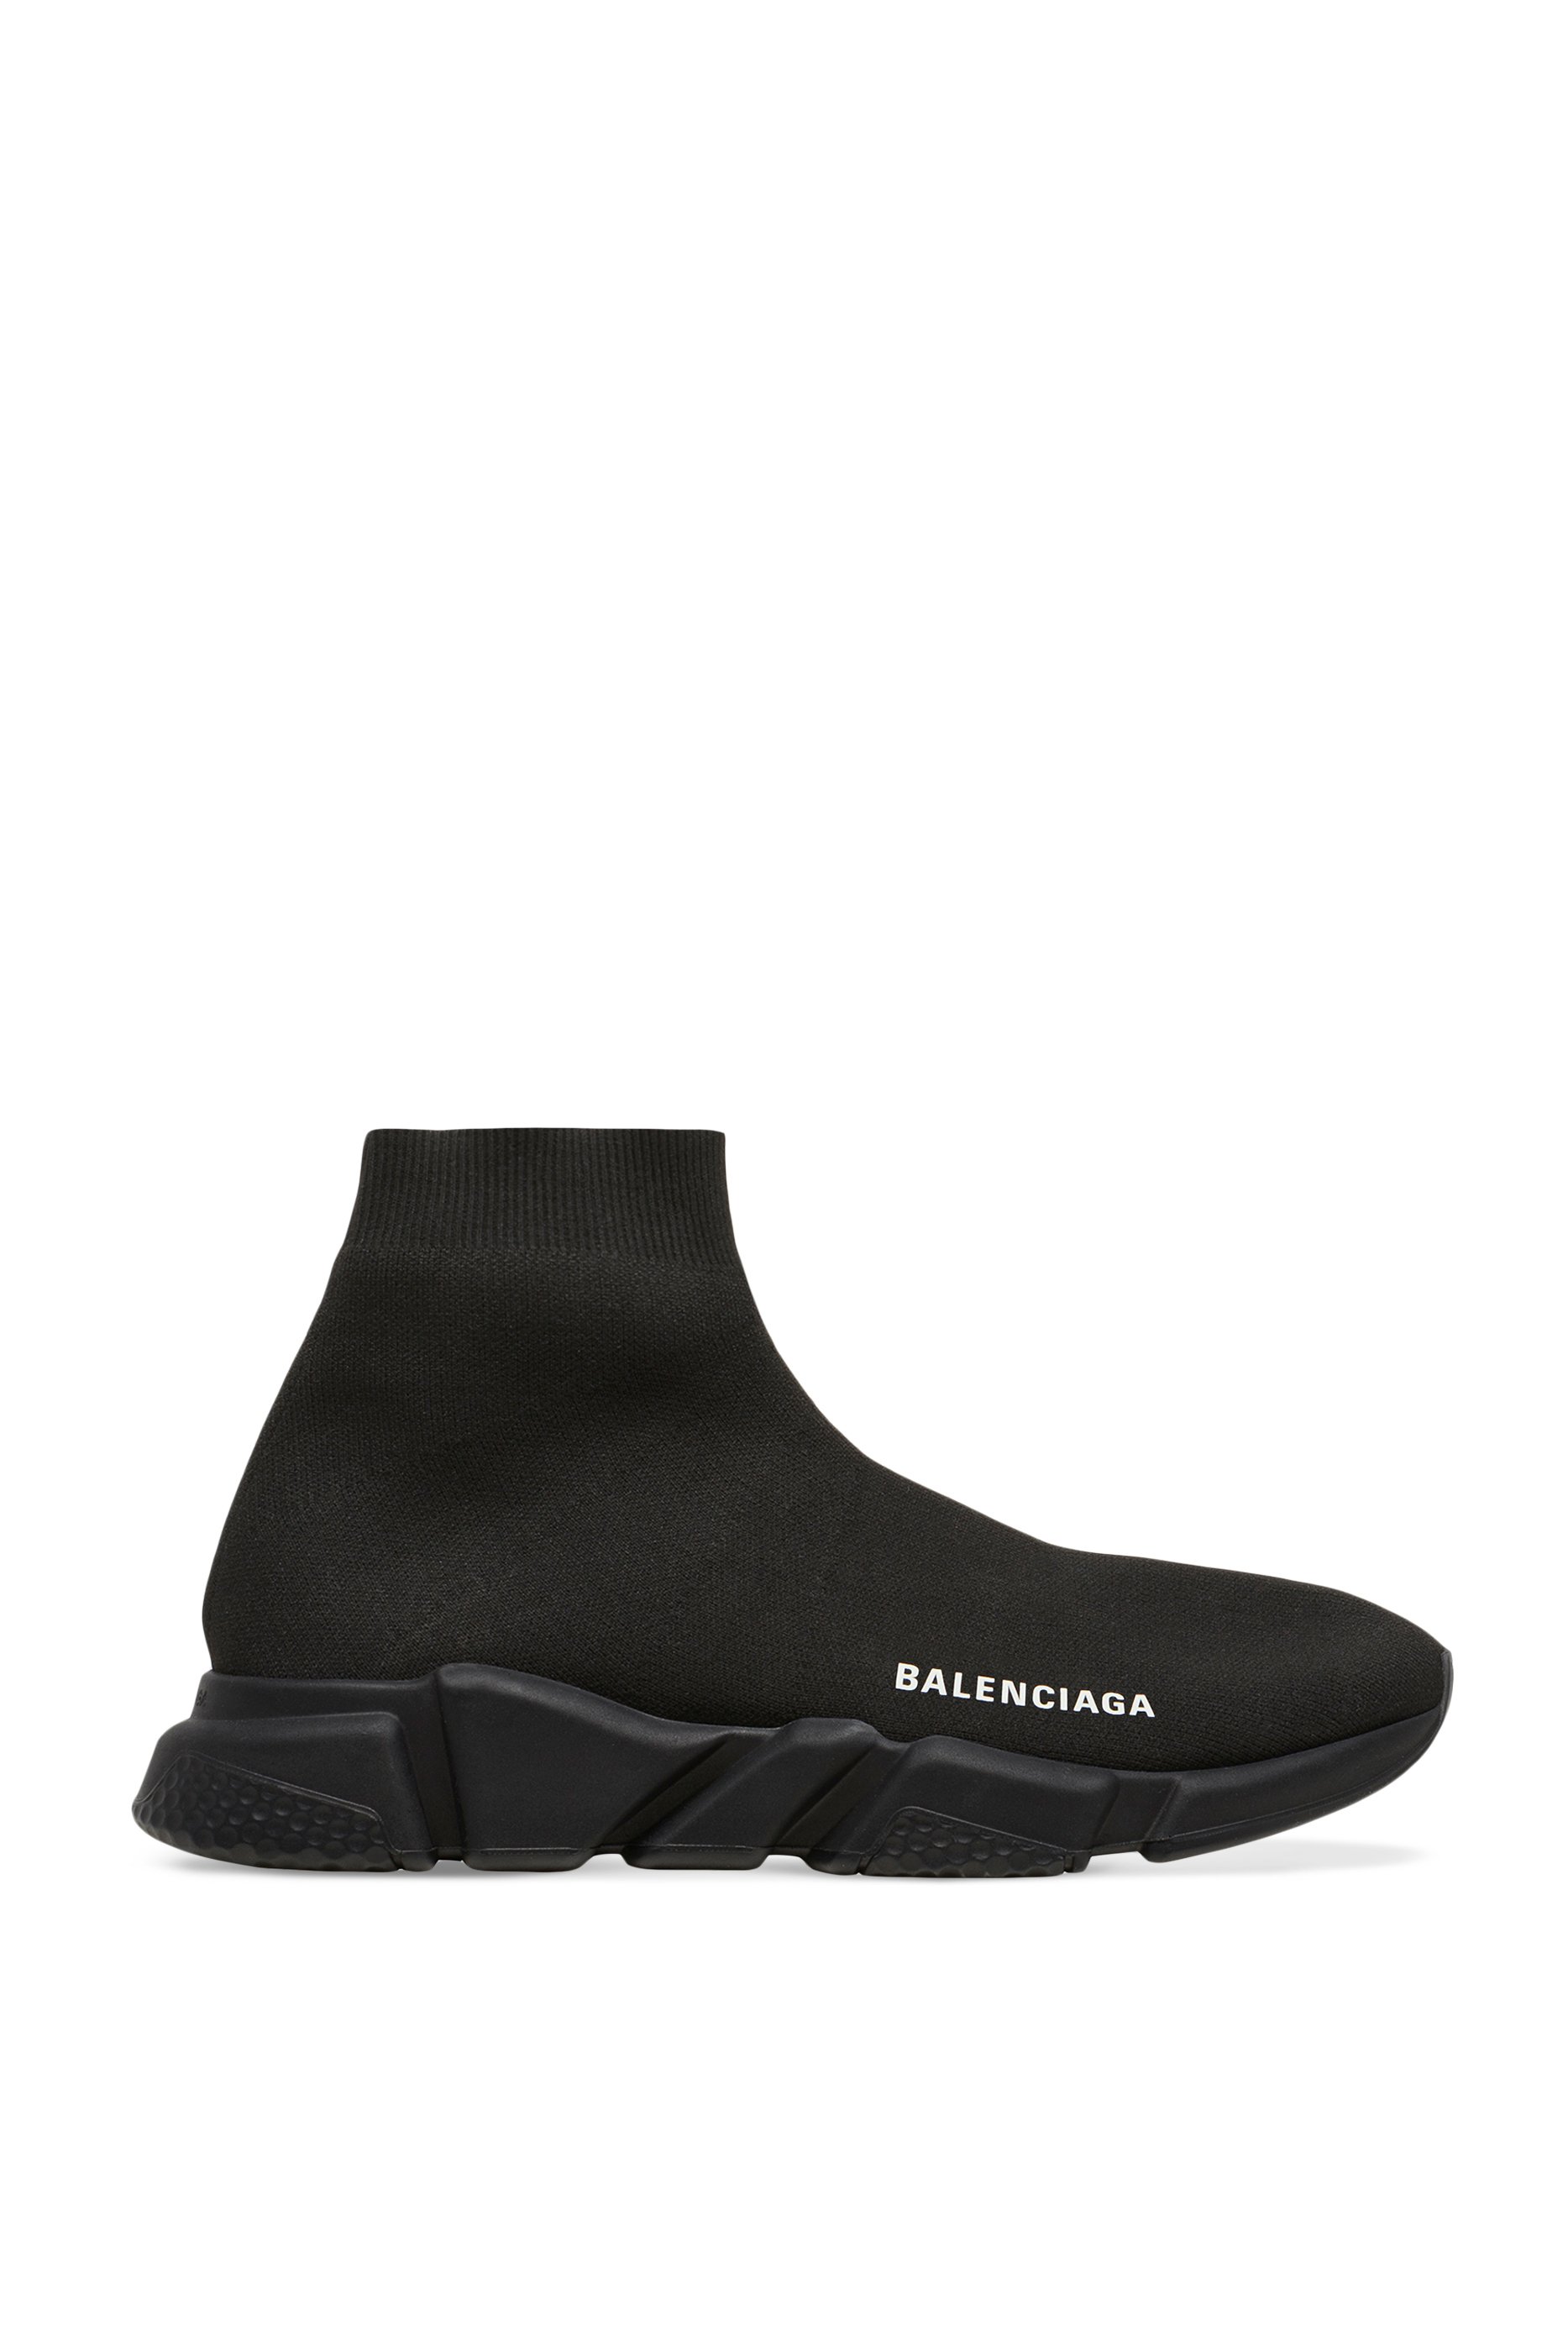 Buy Balenciaga Speed Sneakers for | Bloomingdale's Qatar